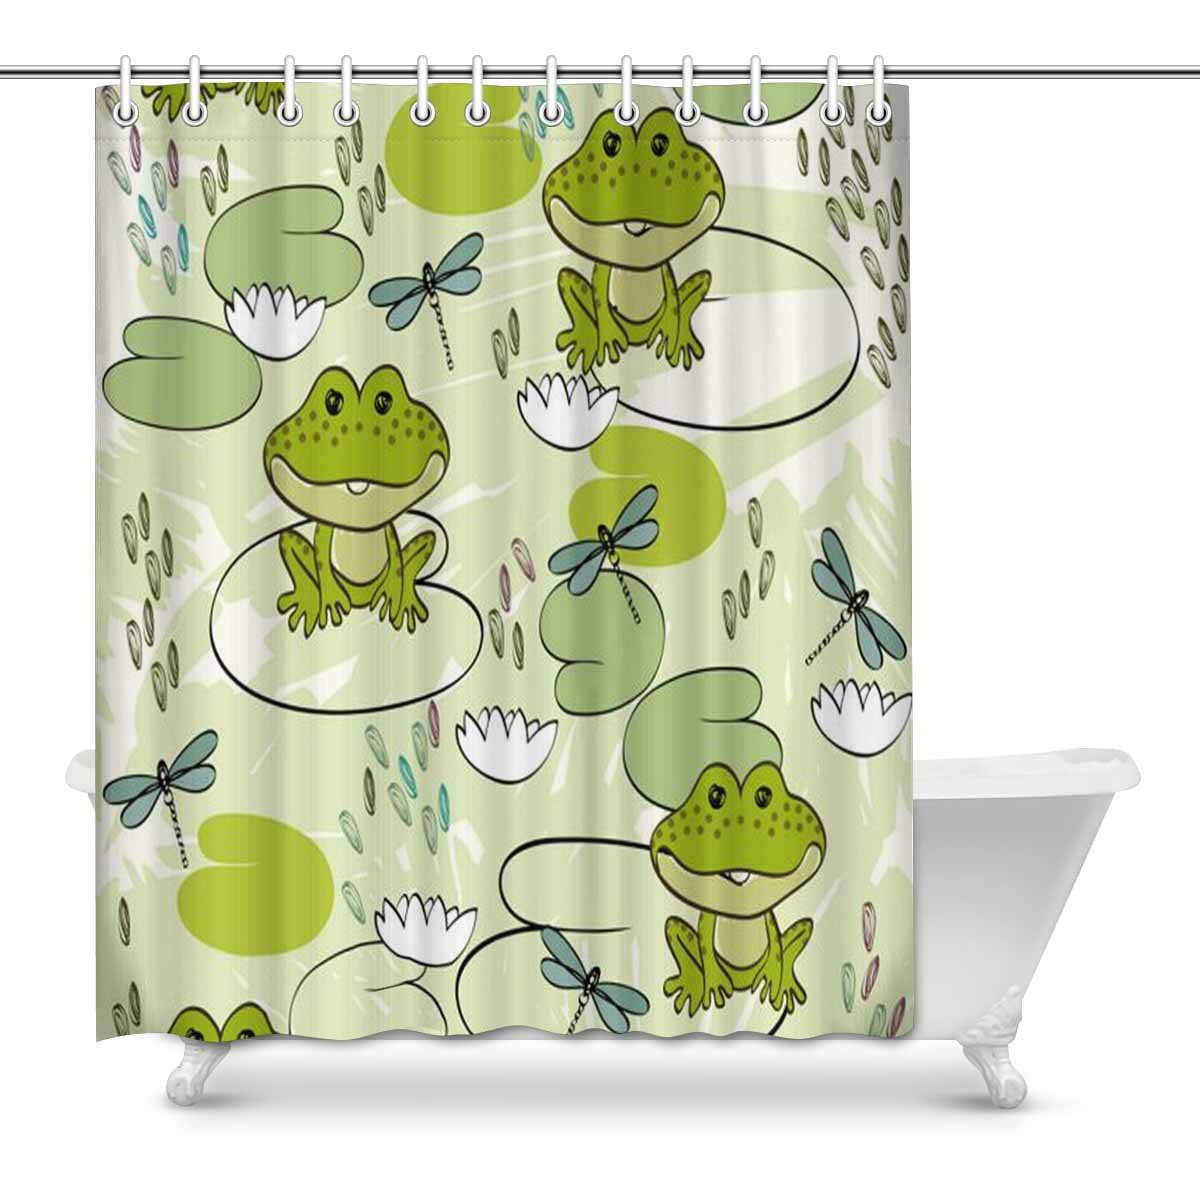 Athlete green frog Shower Curtain Bathroom Decor Waterproof Fabric & 12hooks 